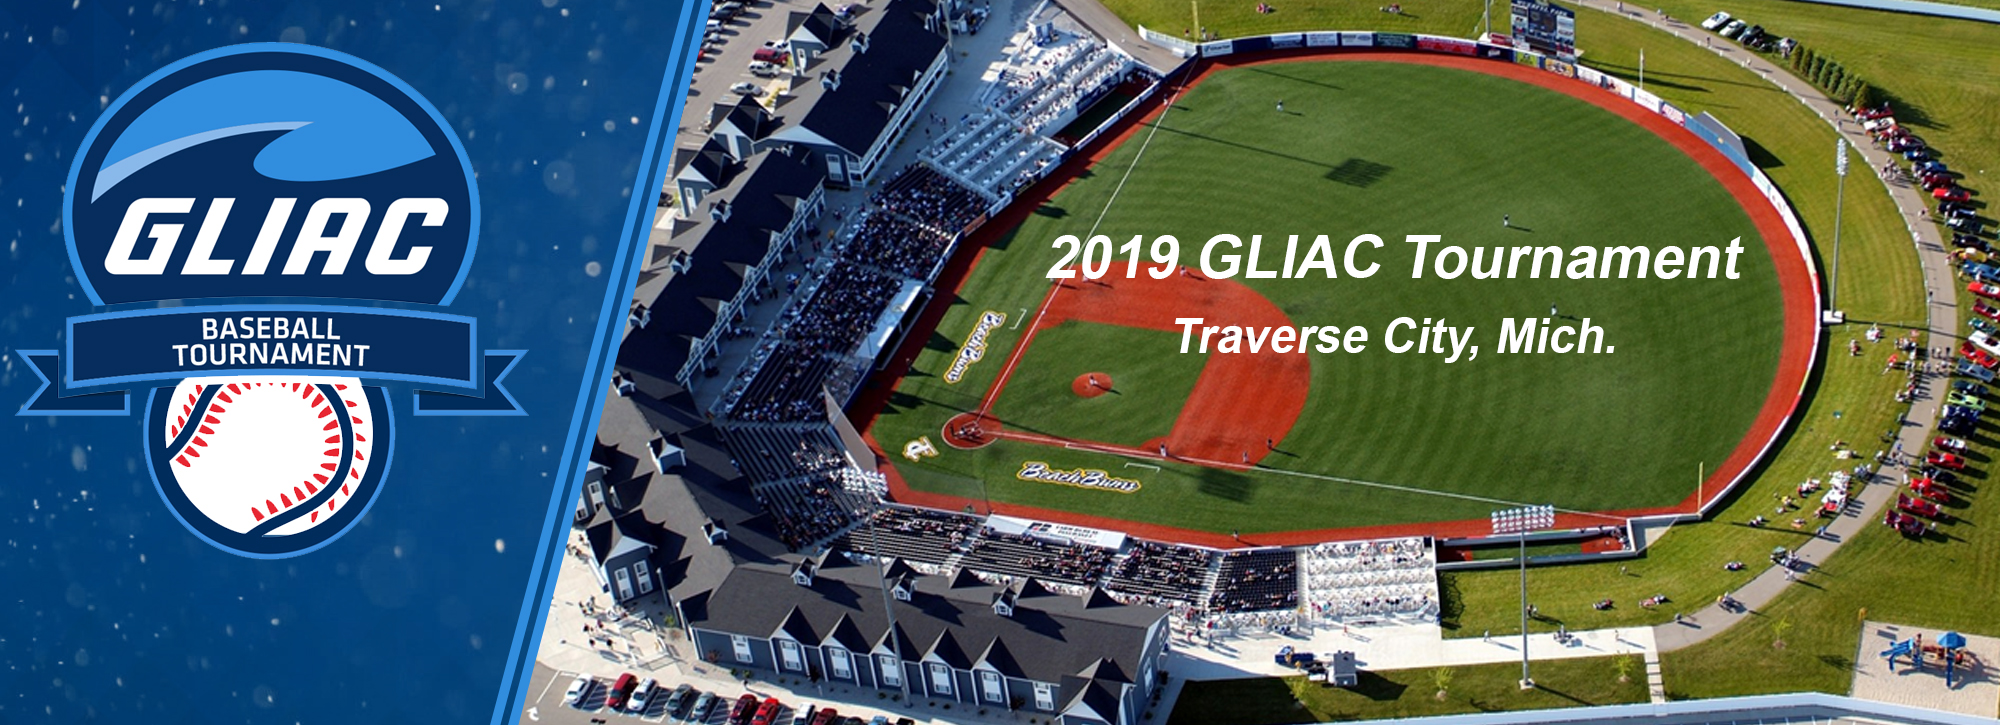 Traverse City to host 2019 GLIAC Baseball Tournament